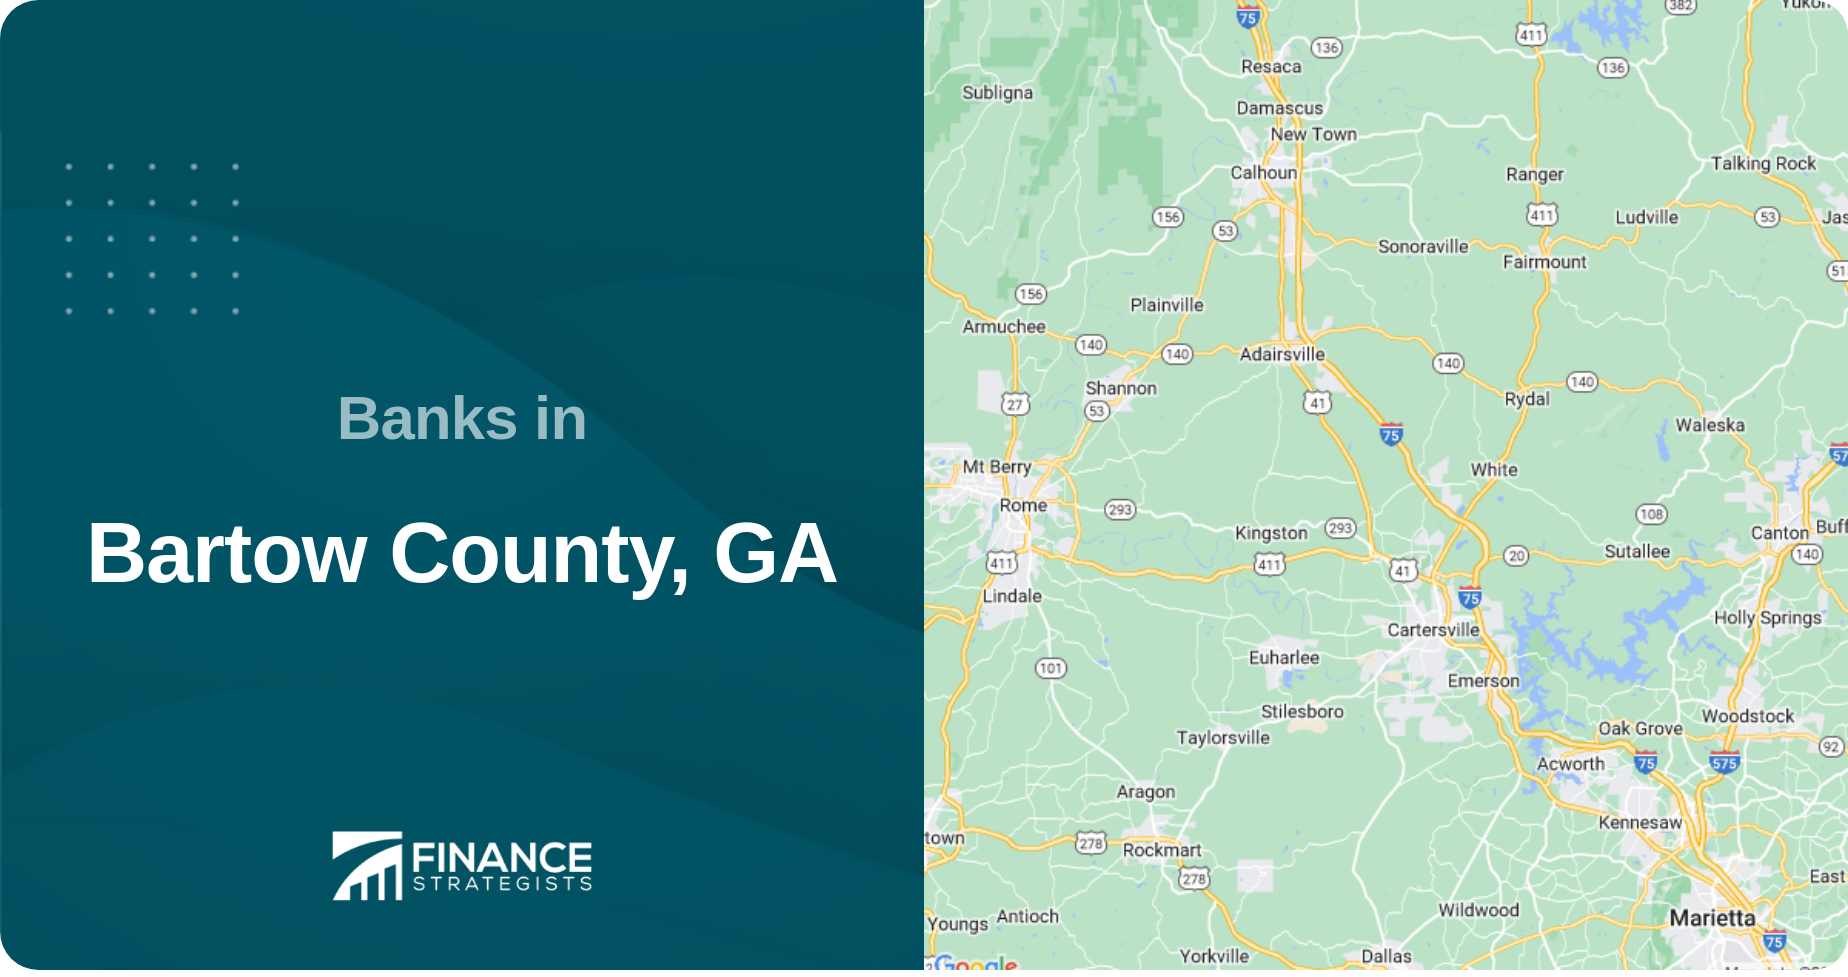 Banks in Bartow County, GA